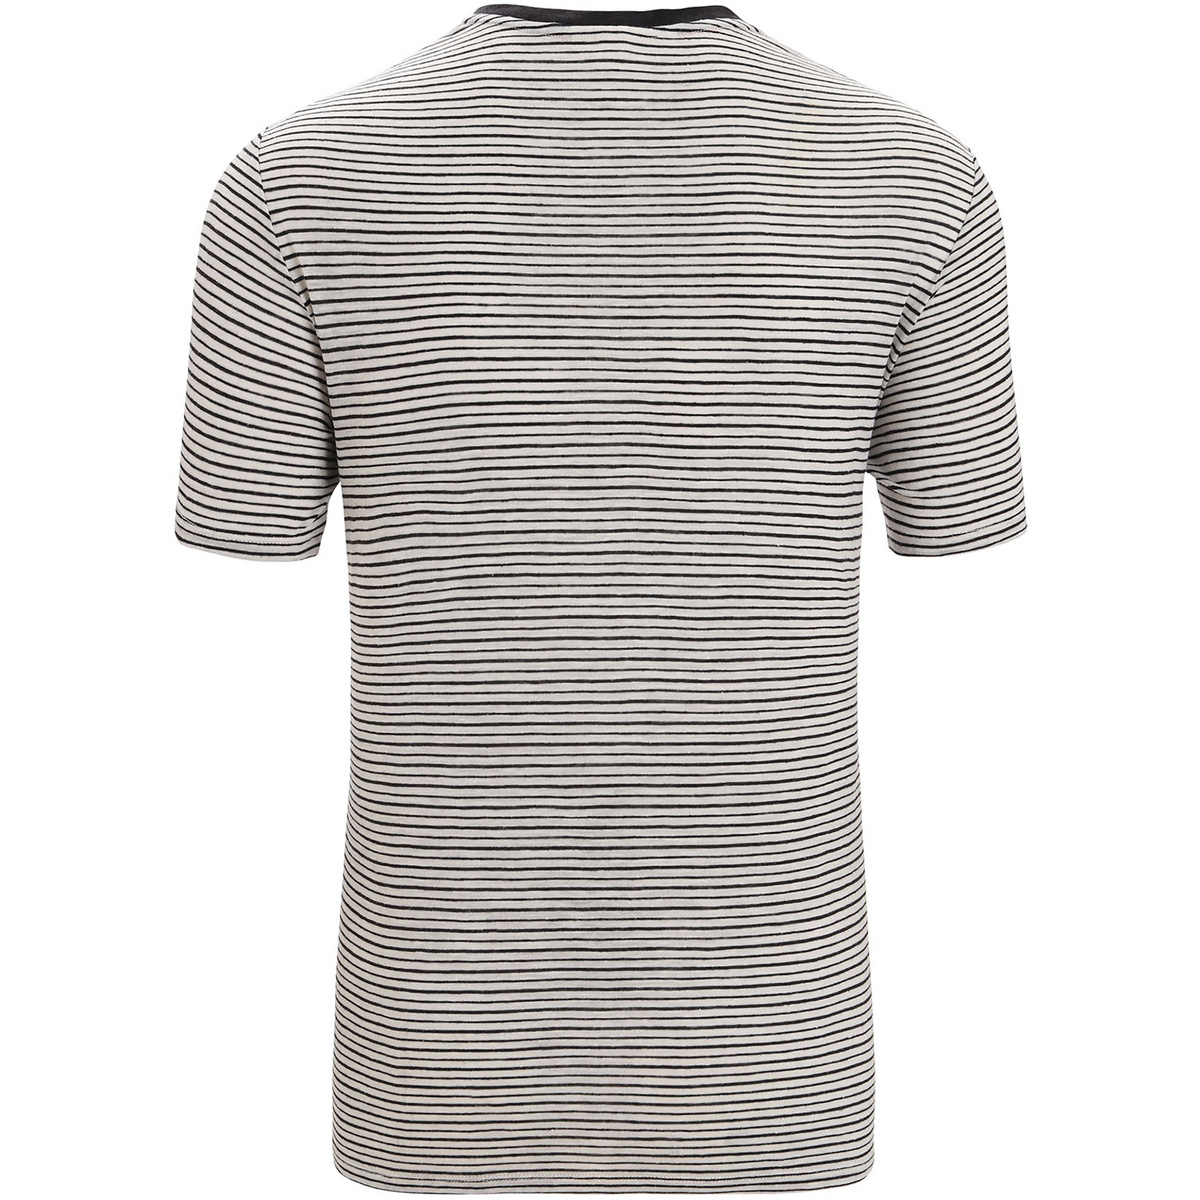 Icebreaker Herren Merino Linen Stripe T-Shirt von Icebreaker